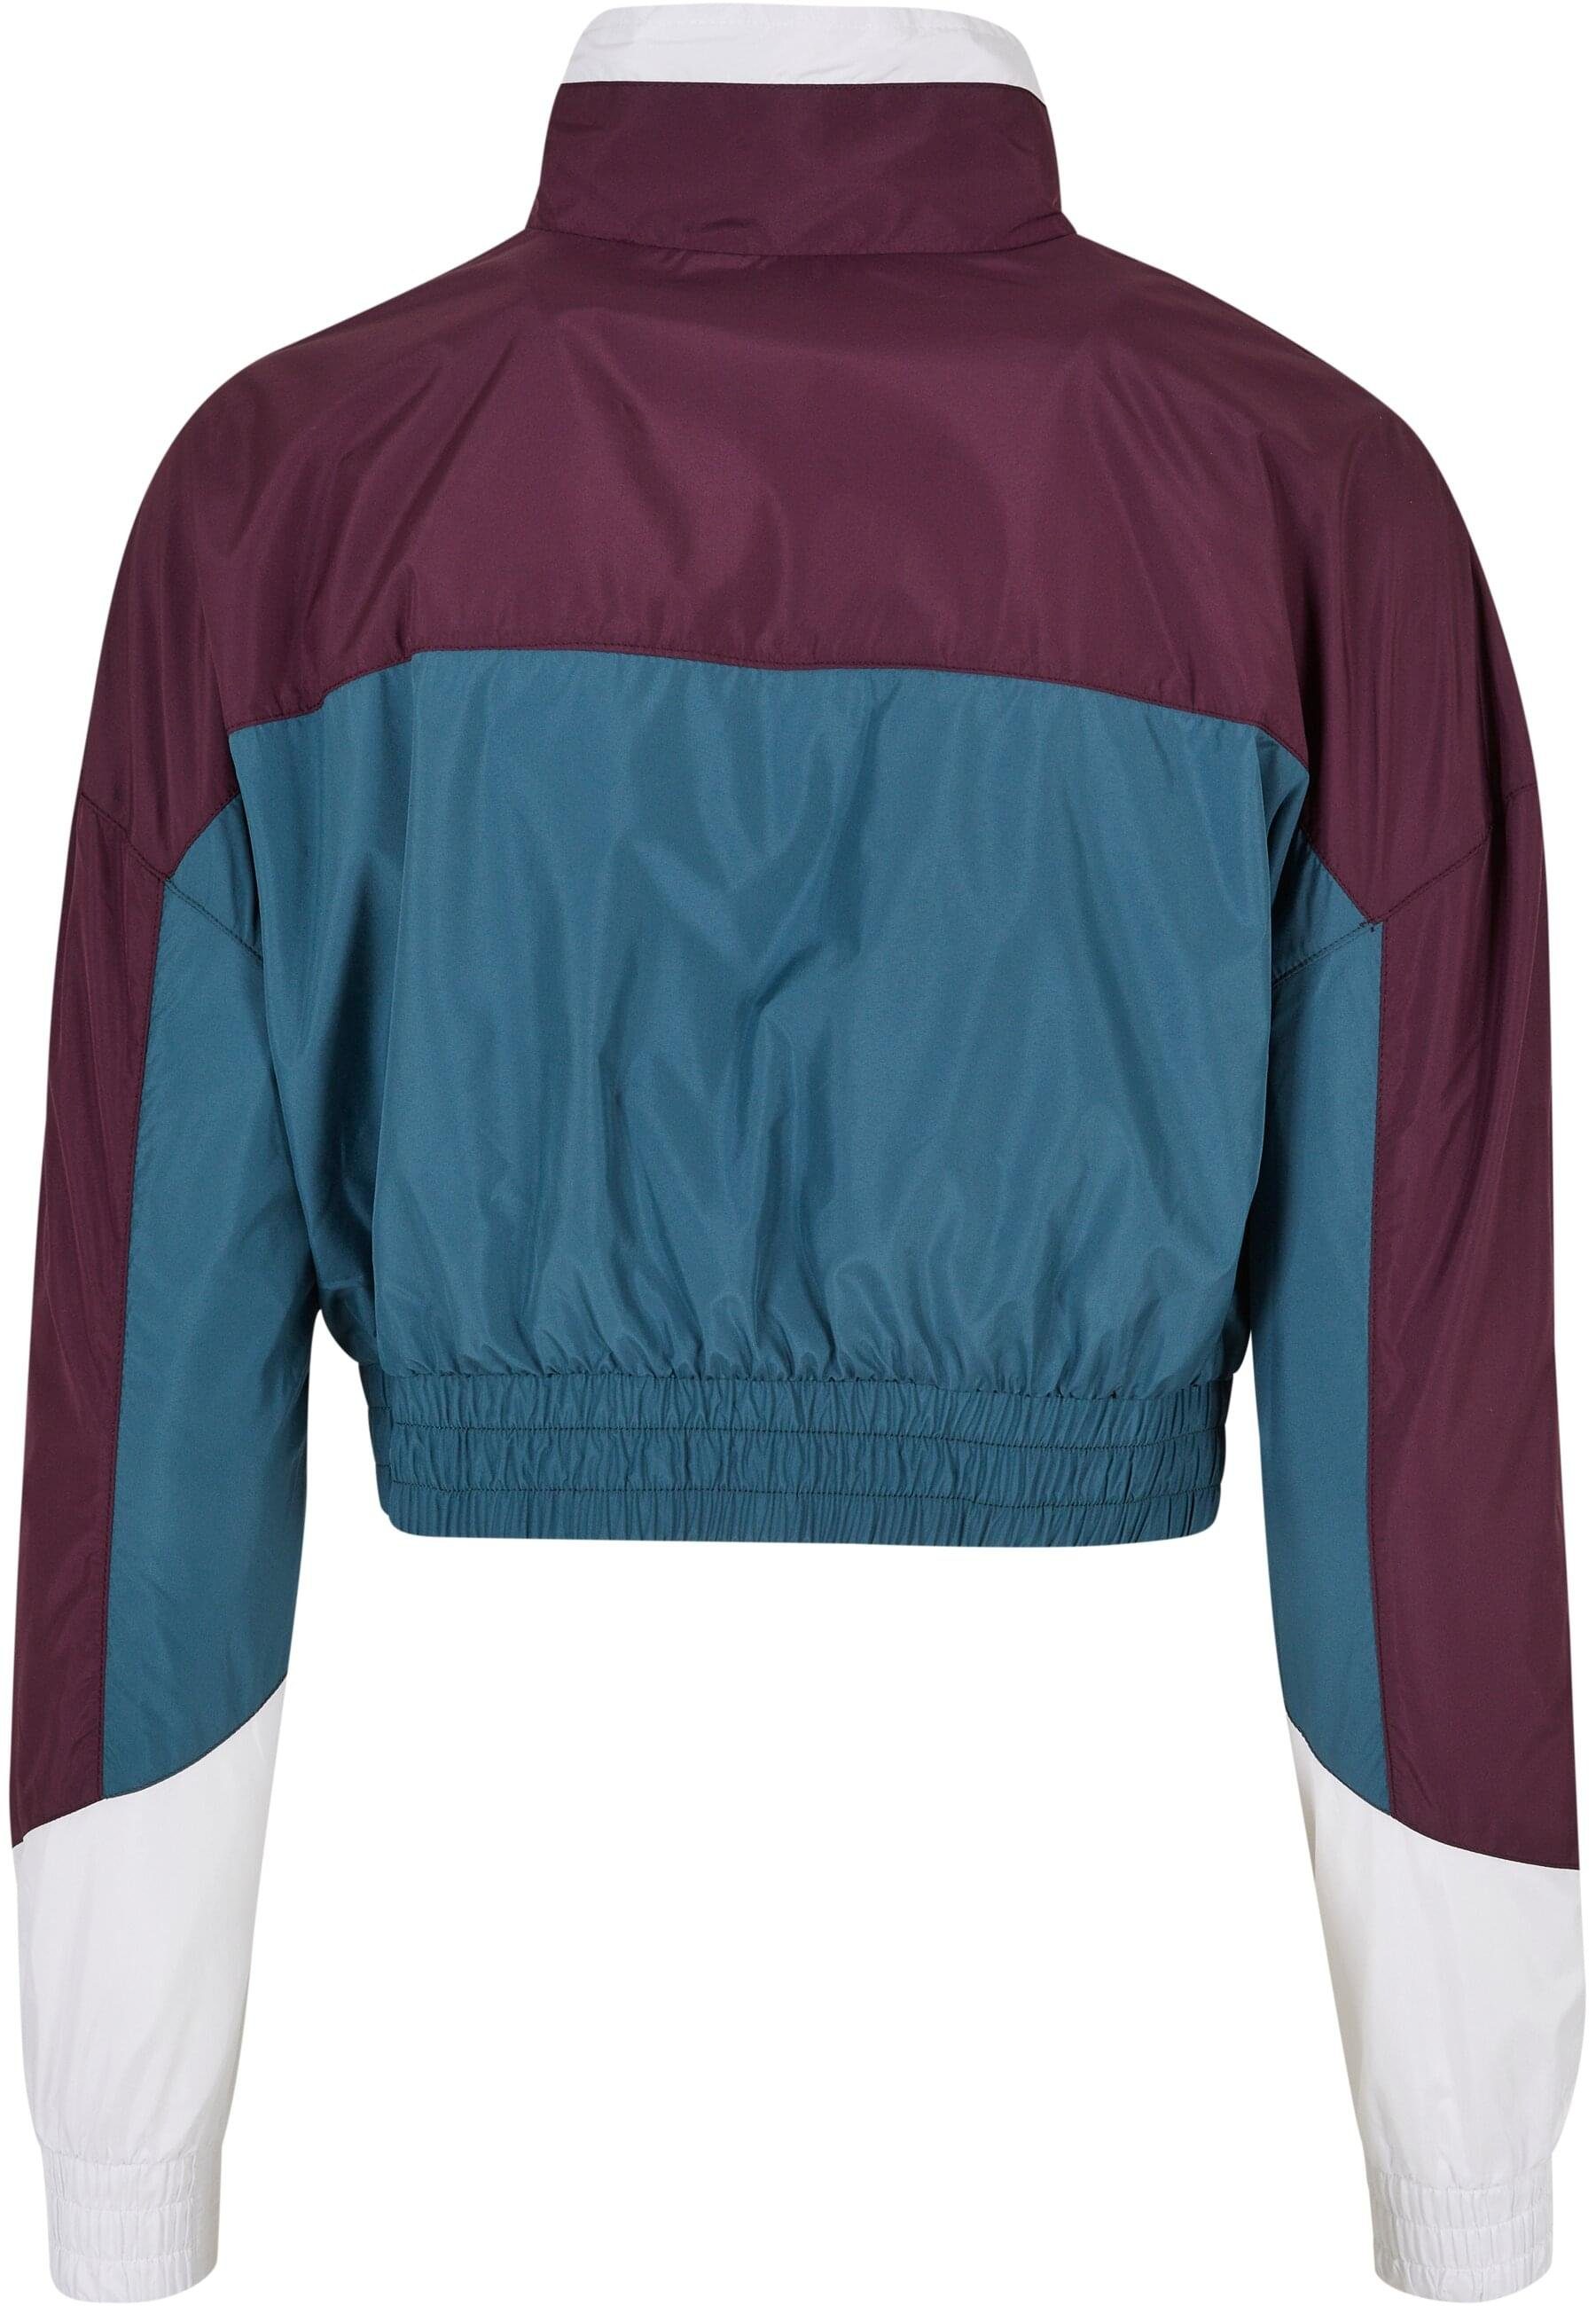 Over (1-St) Label Damen Starter Jacket Colorblock Outdoorjacke darkviolet/teal Starter Black Pull Ladies